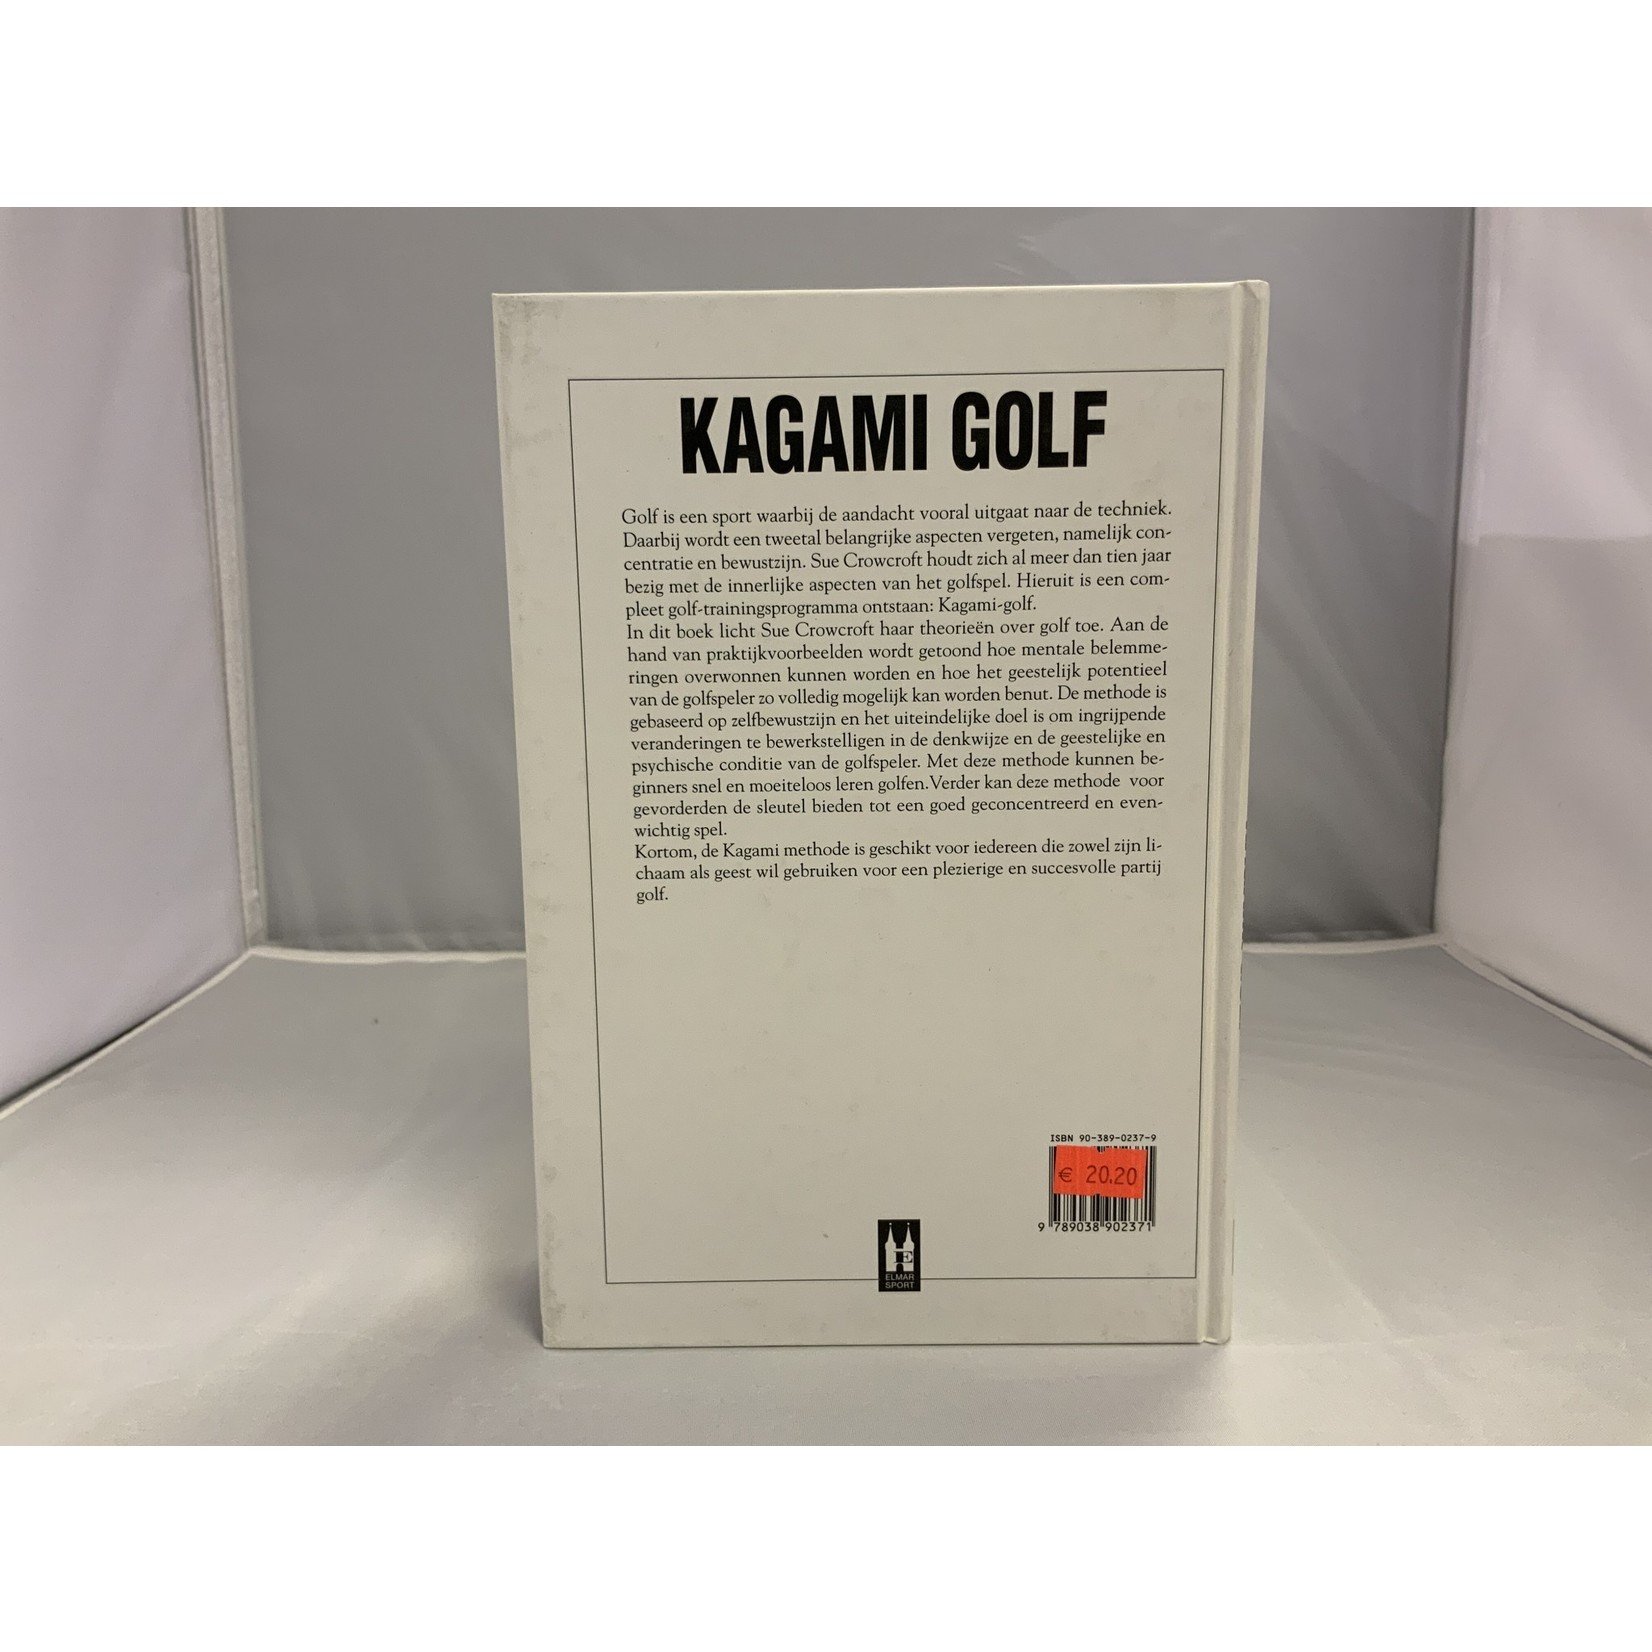 Kagami Golf